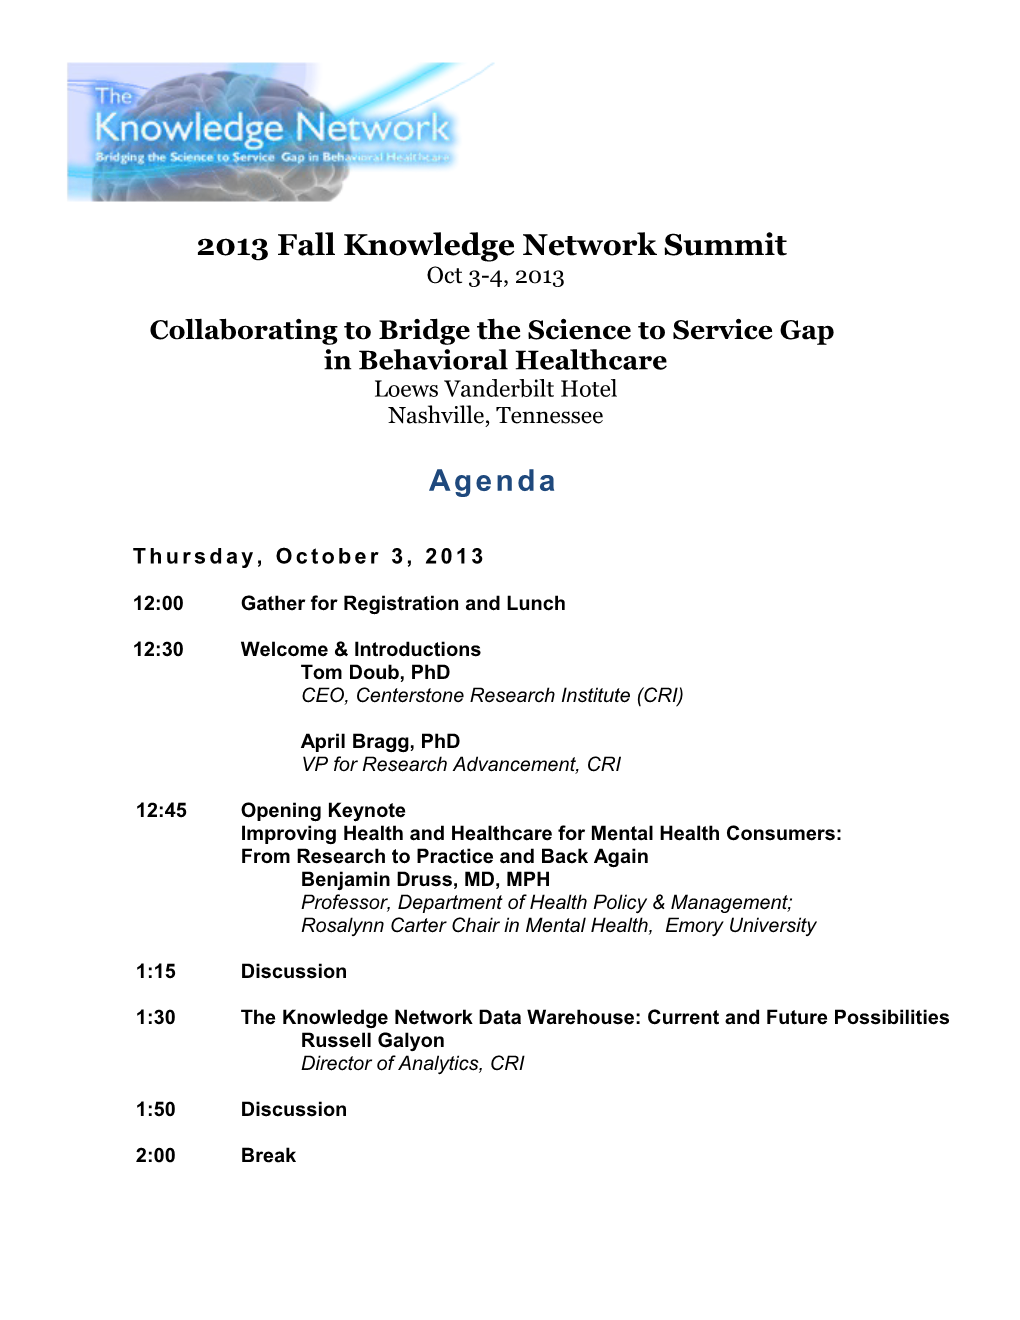 Knowledge Network Summit